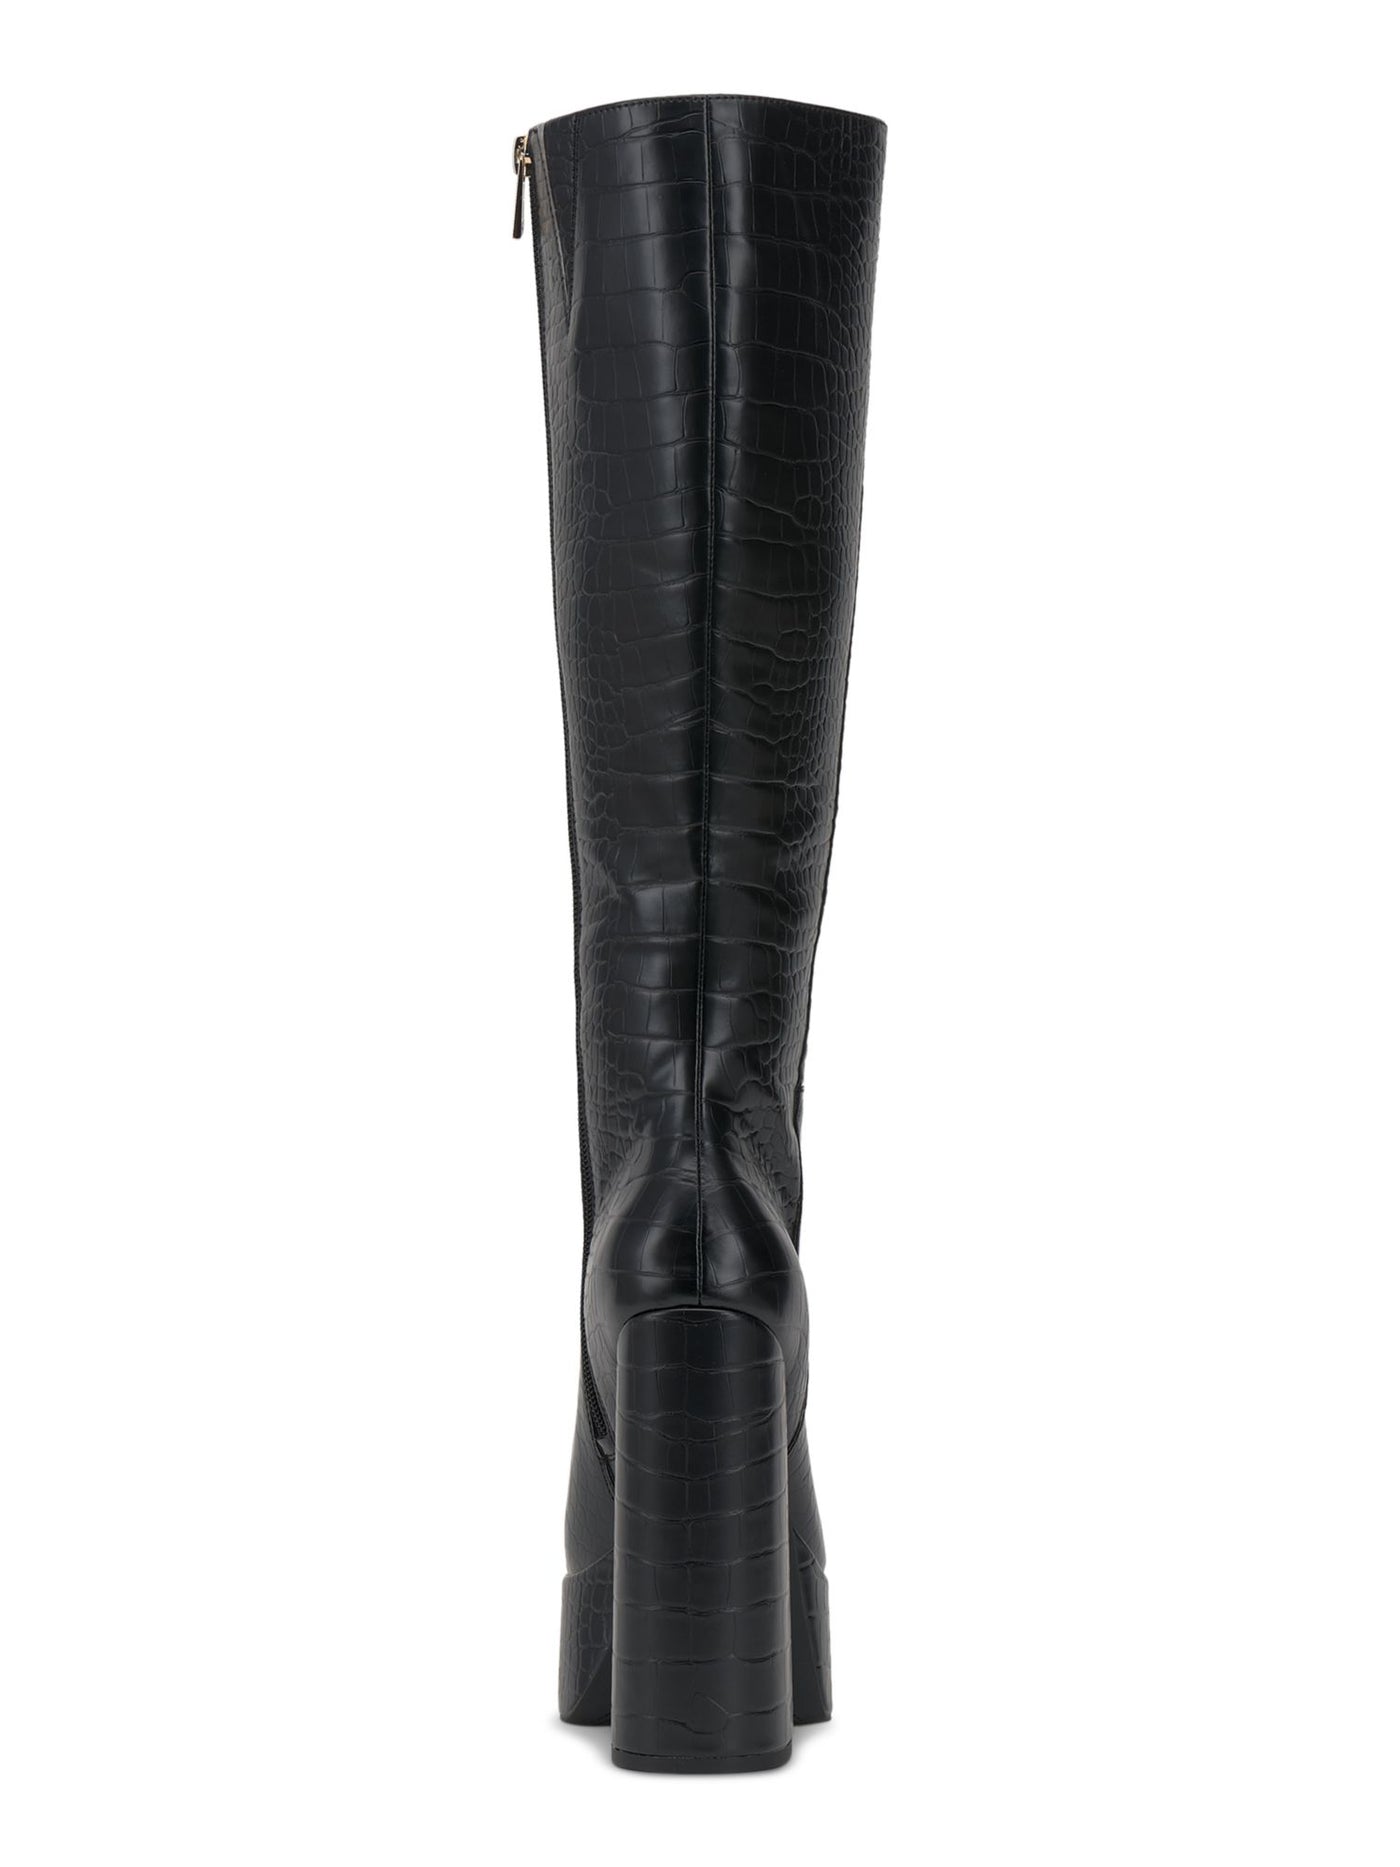 JESSICA SIMPSON Womens Black Animal Print 2" Platform Goring Padded Samah Square Toe Block Heel Zip-Up Dress Boots 8 M